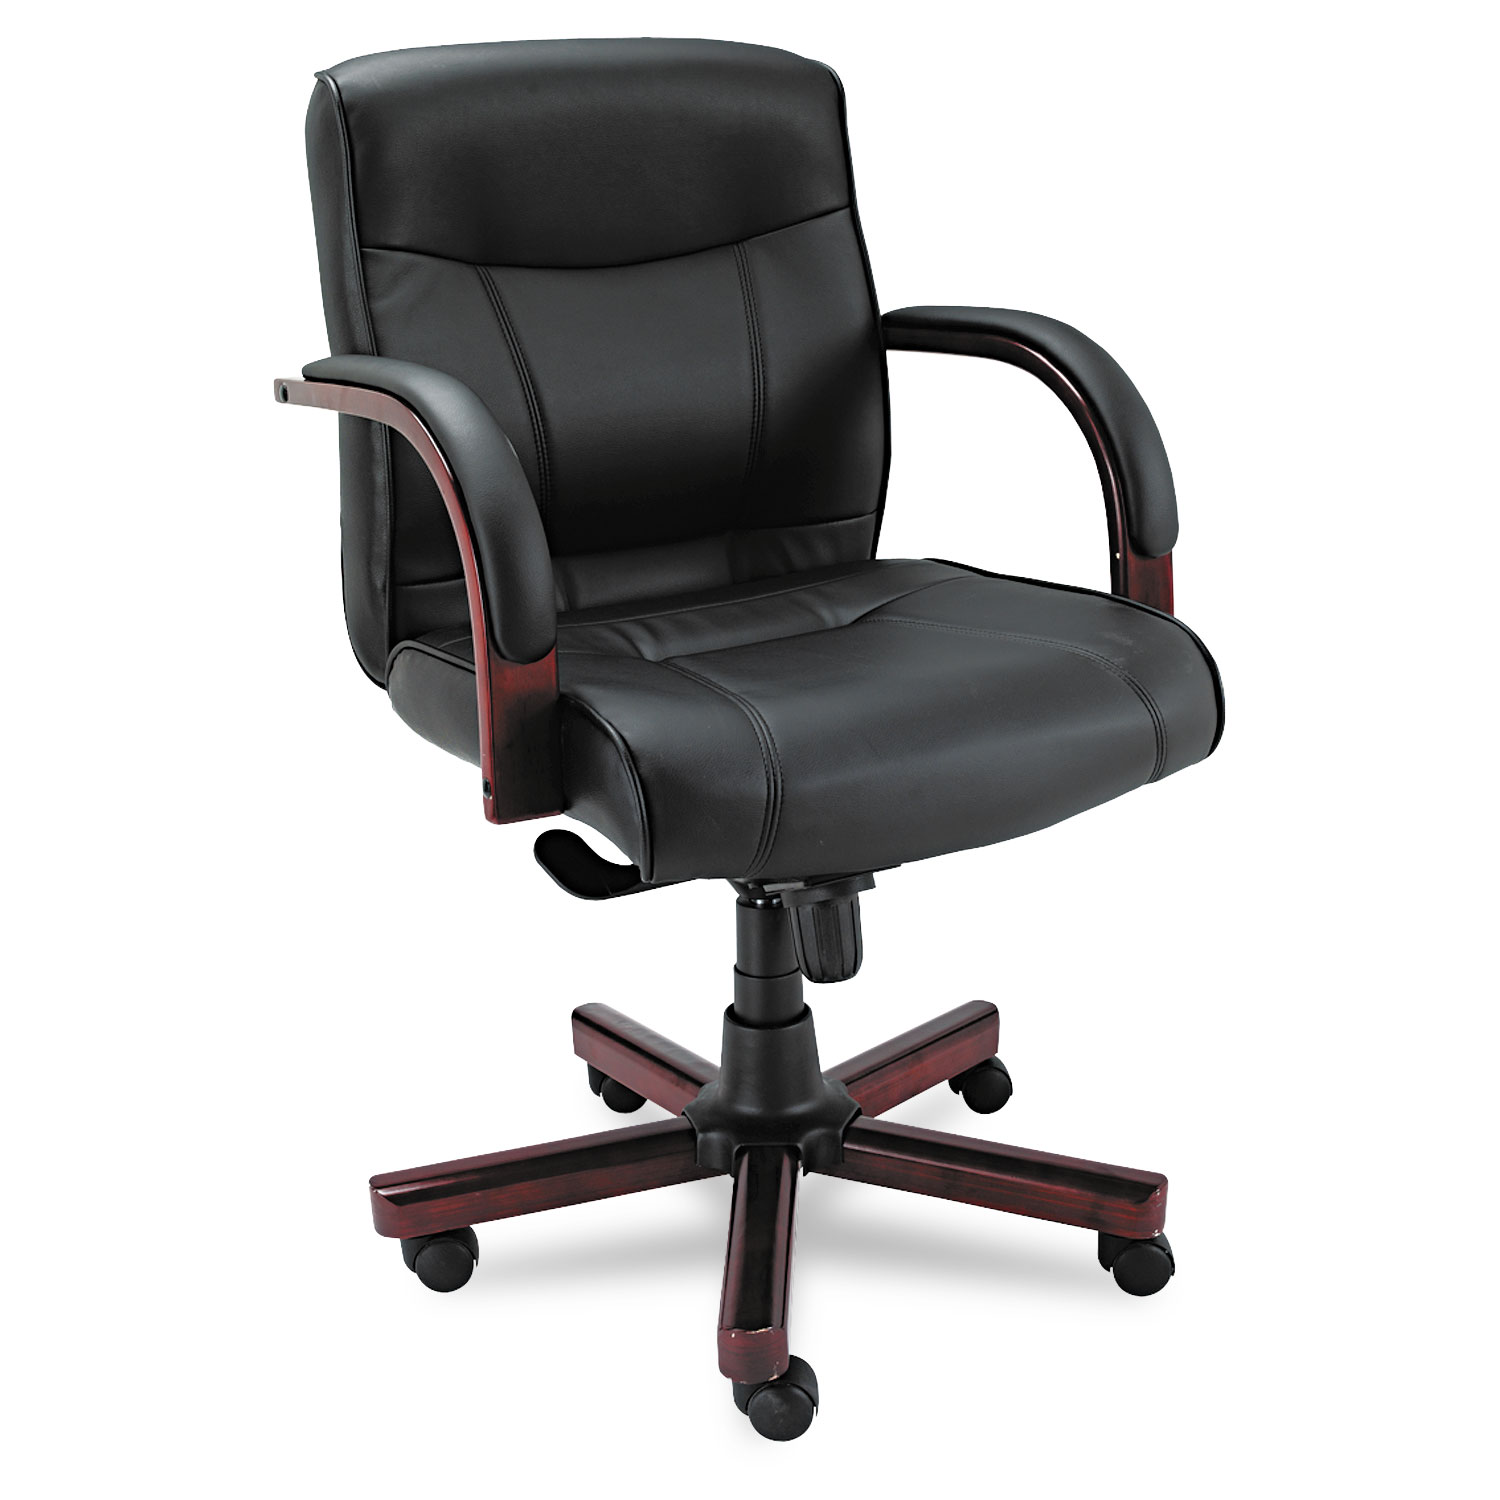  Alera ALEMA42LS10M Alera Madaris Series Mid-Back Knee Tilt Leather Chair with Wood Trim, Supports up to 275 lbs., Black Seat/Back, Mahogany Base (ALEMA42LS10M) 